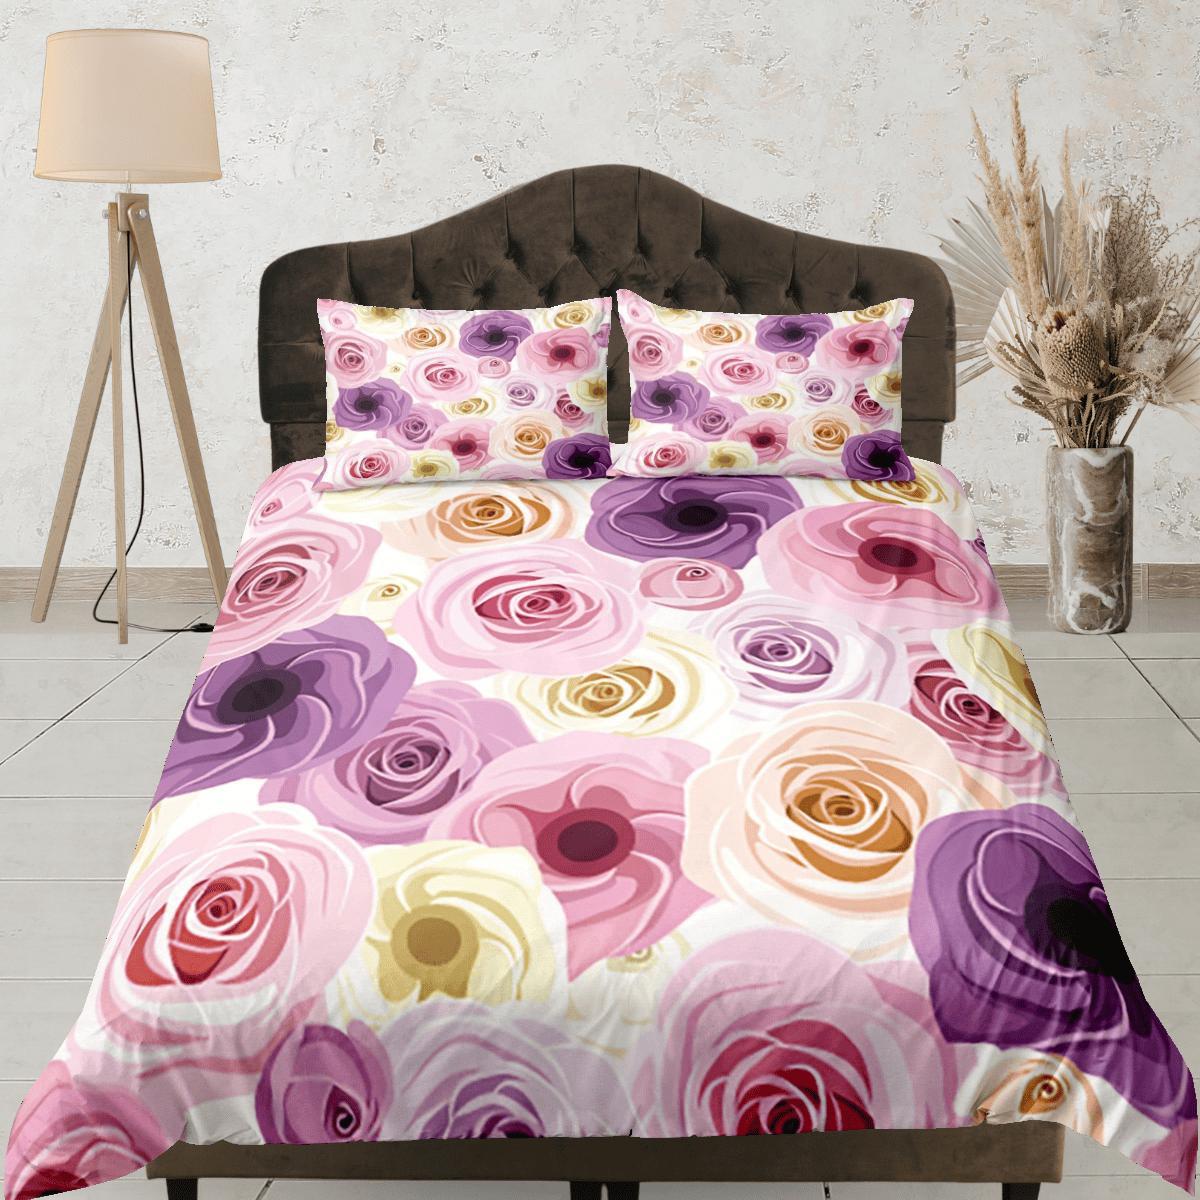 daintyduvet Pink Roses Duvet Cover Set Colorful Bedspread, Floral Girly Dorm Bedding Pillowcase